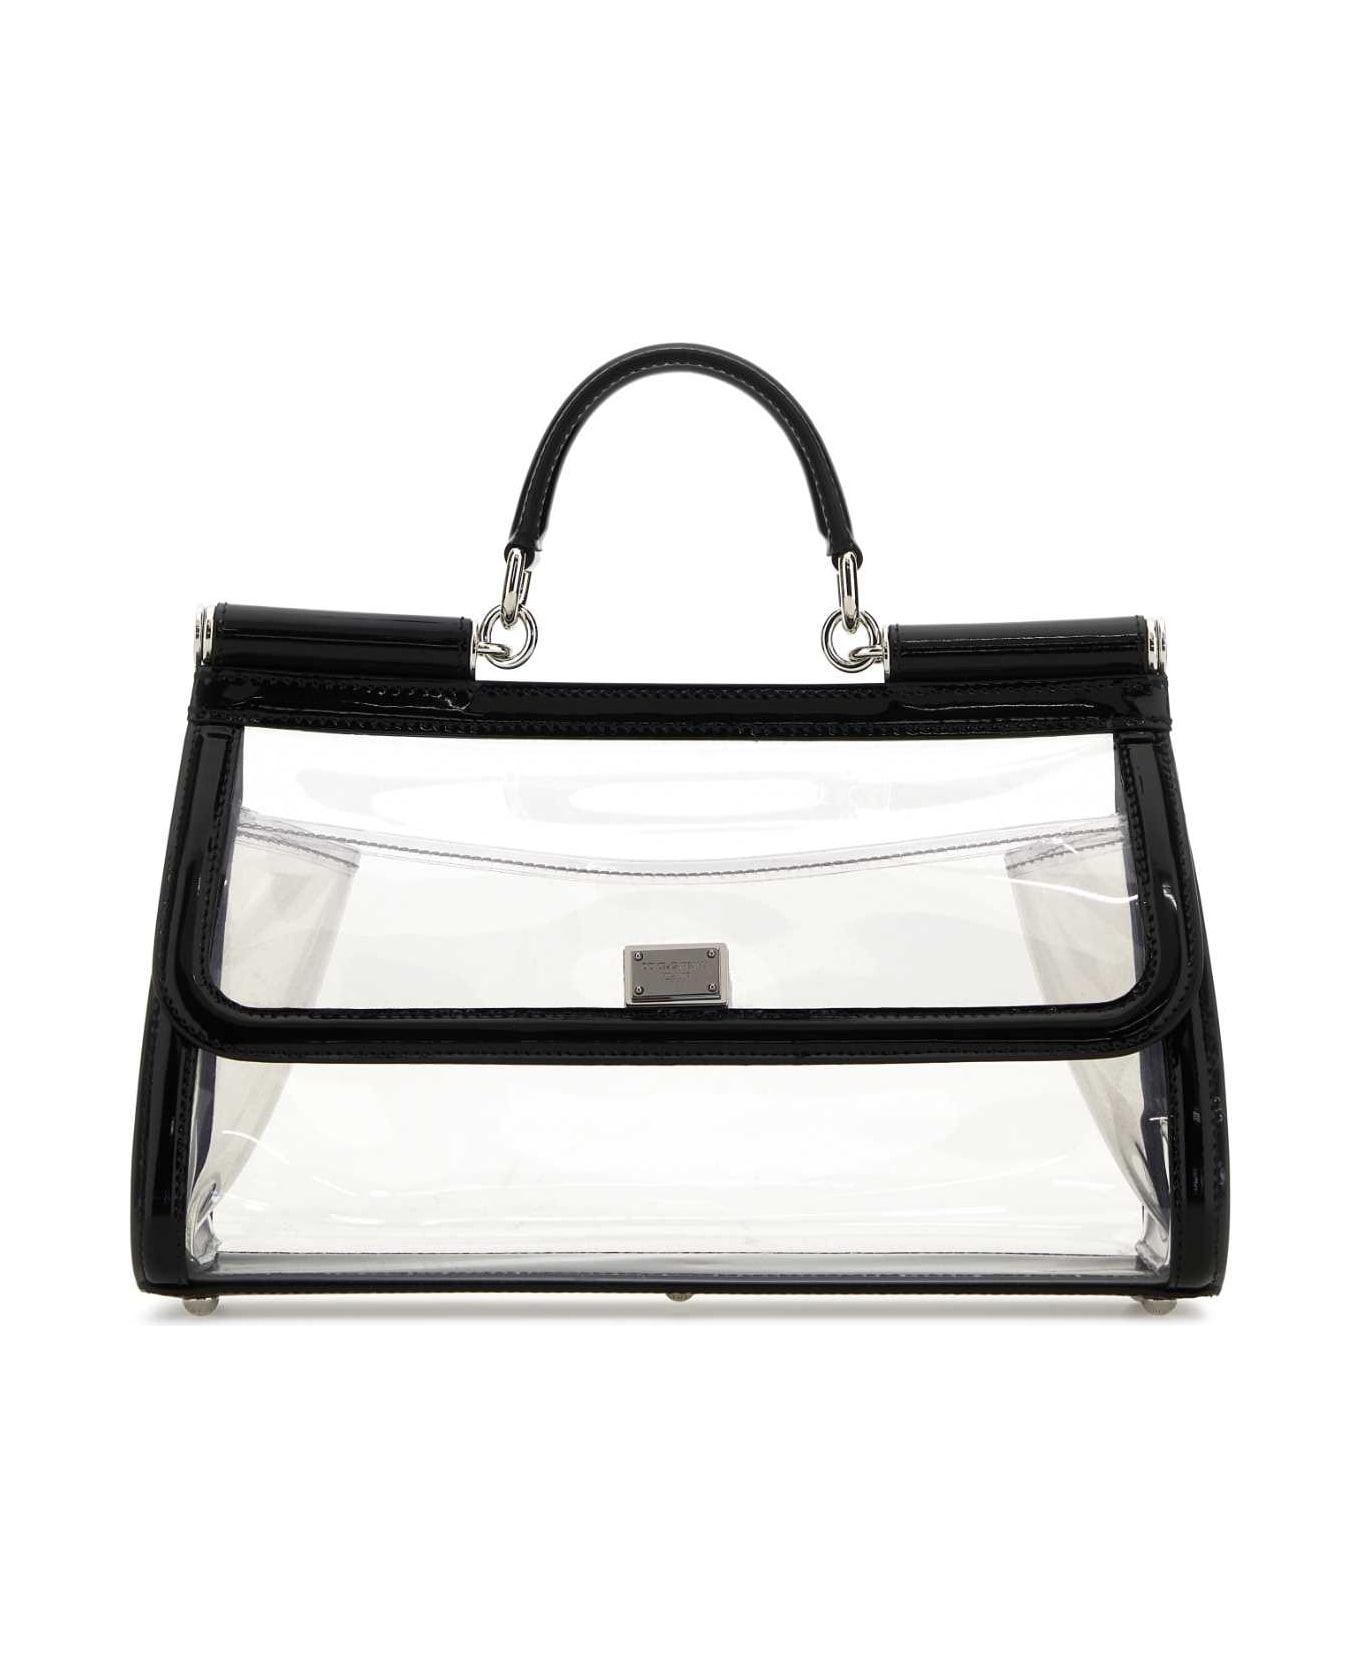 Dolce & Gabbana Two-tone Pvc And Leather Medium Sicily Handbag - TRASPARENTENERO